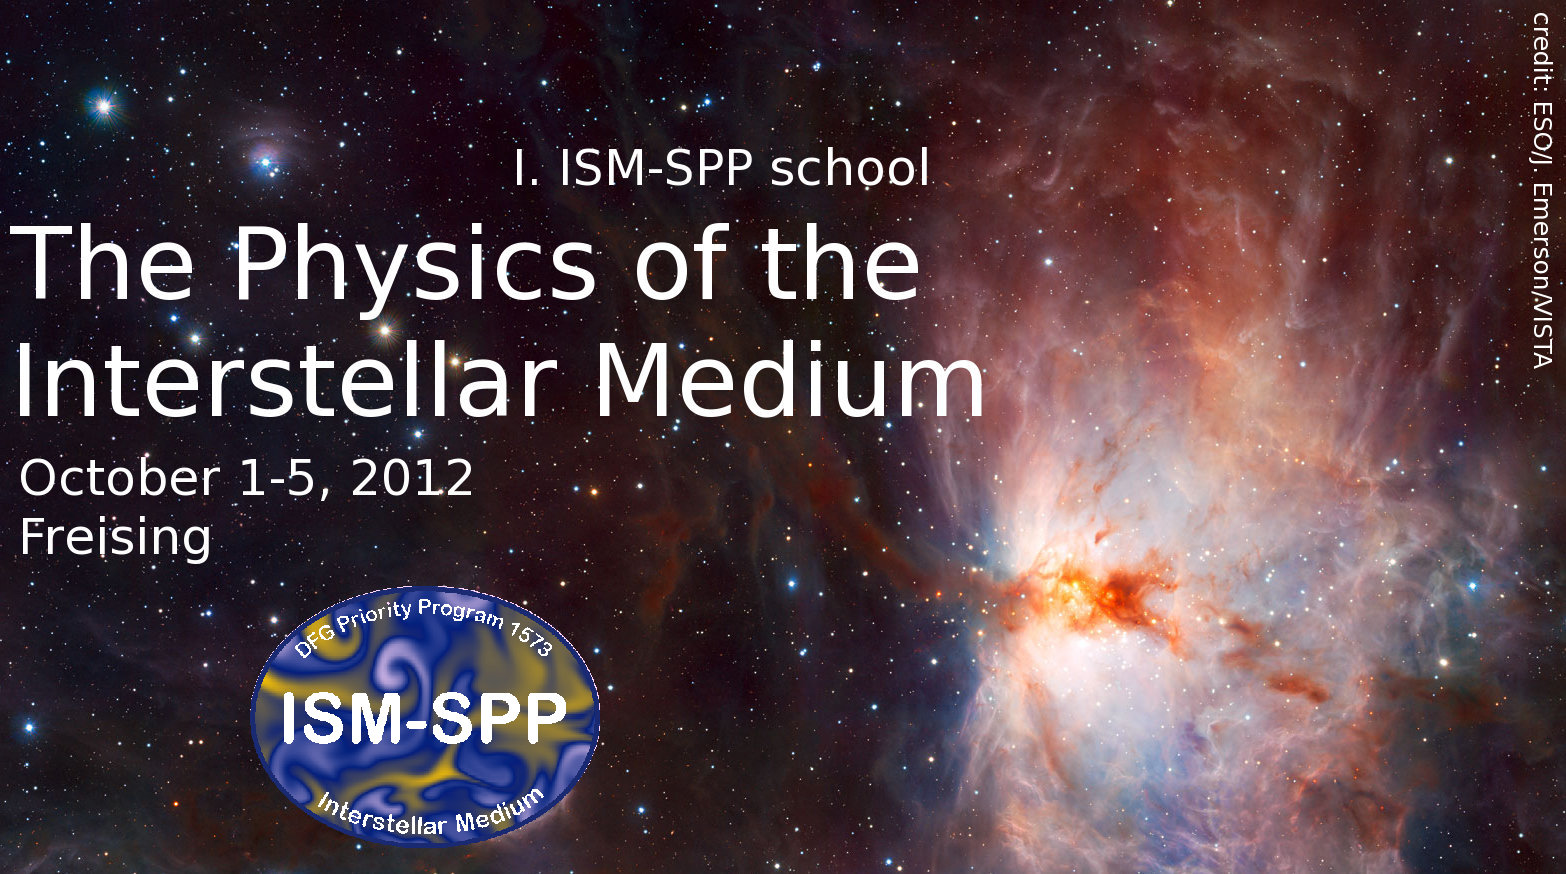 School on Physics of the Interstellar Medium